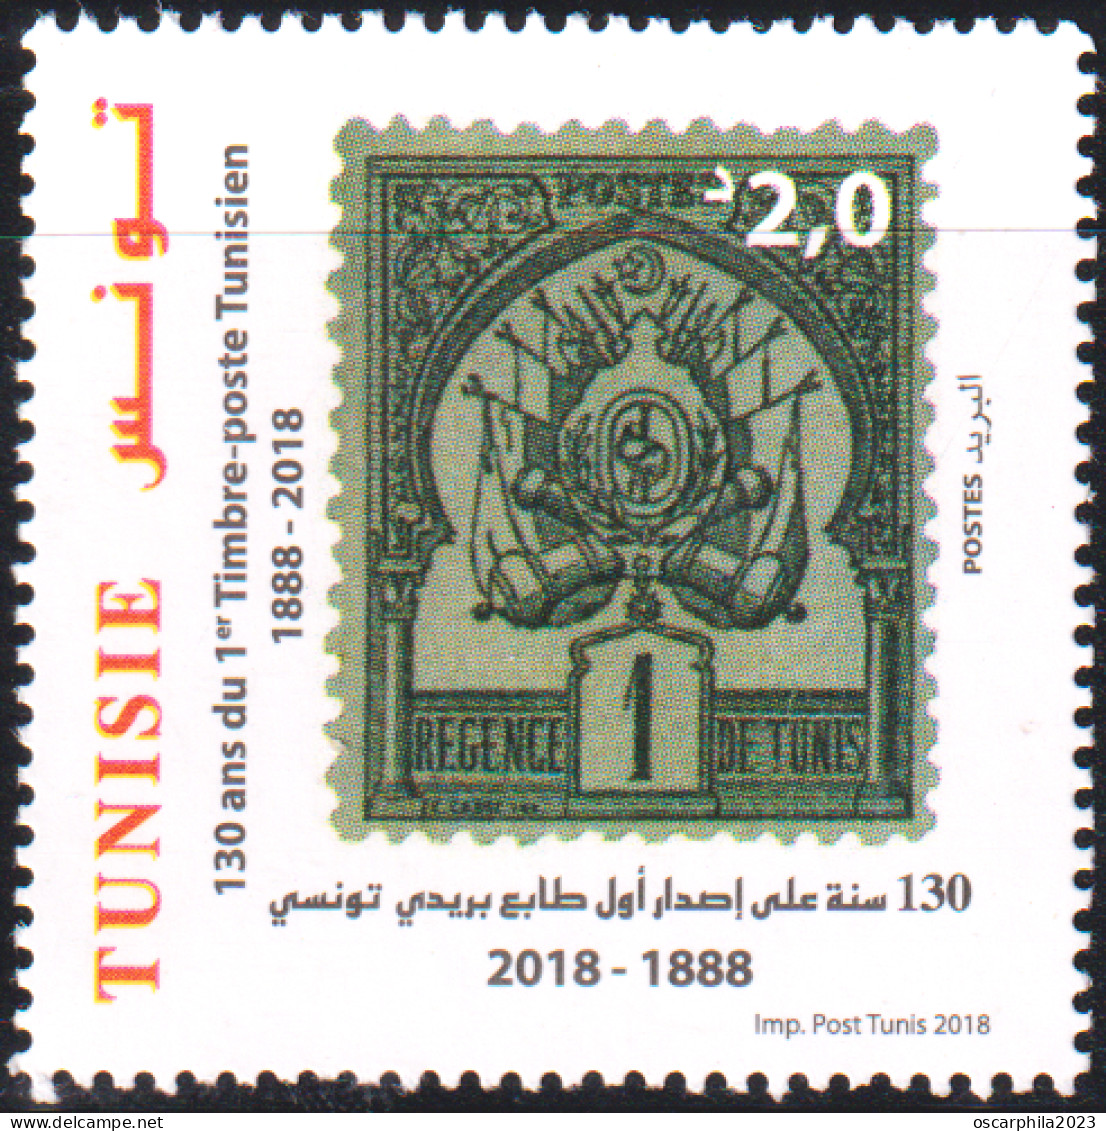 2018 - Tunisie  - 130 Ans De L’Emission Du 1er Timbre-poste Tunisien -série Complète - 1V  -  MNH***** - Stamps On Stamps